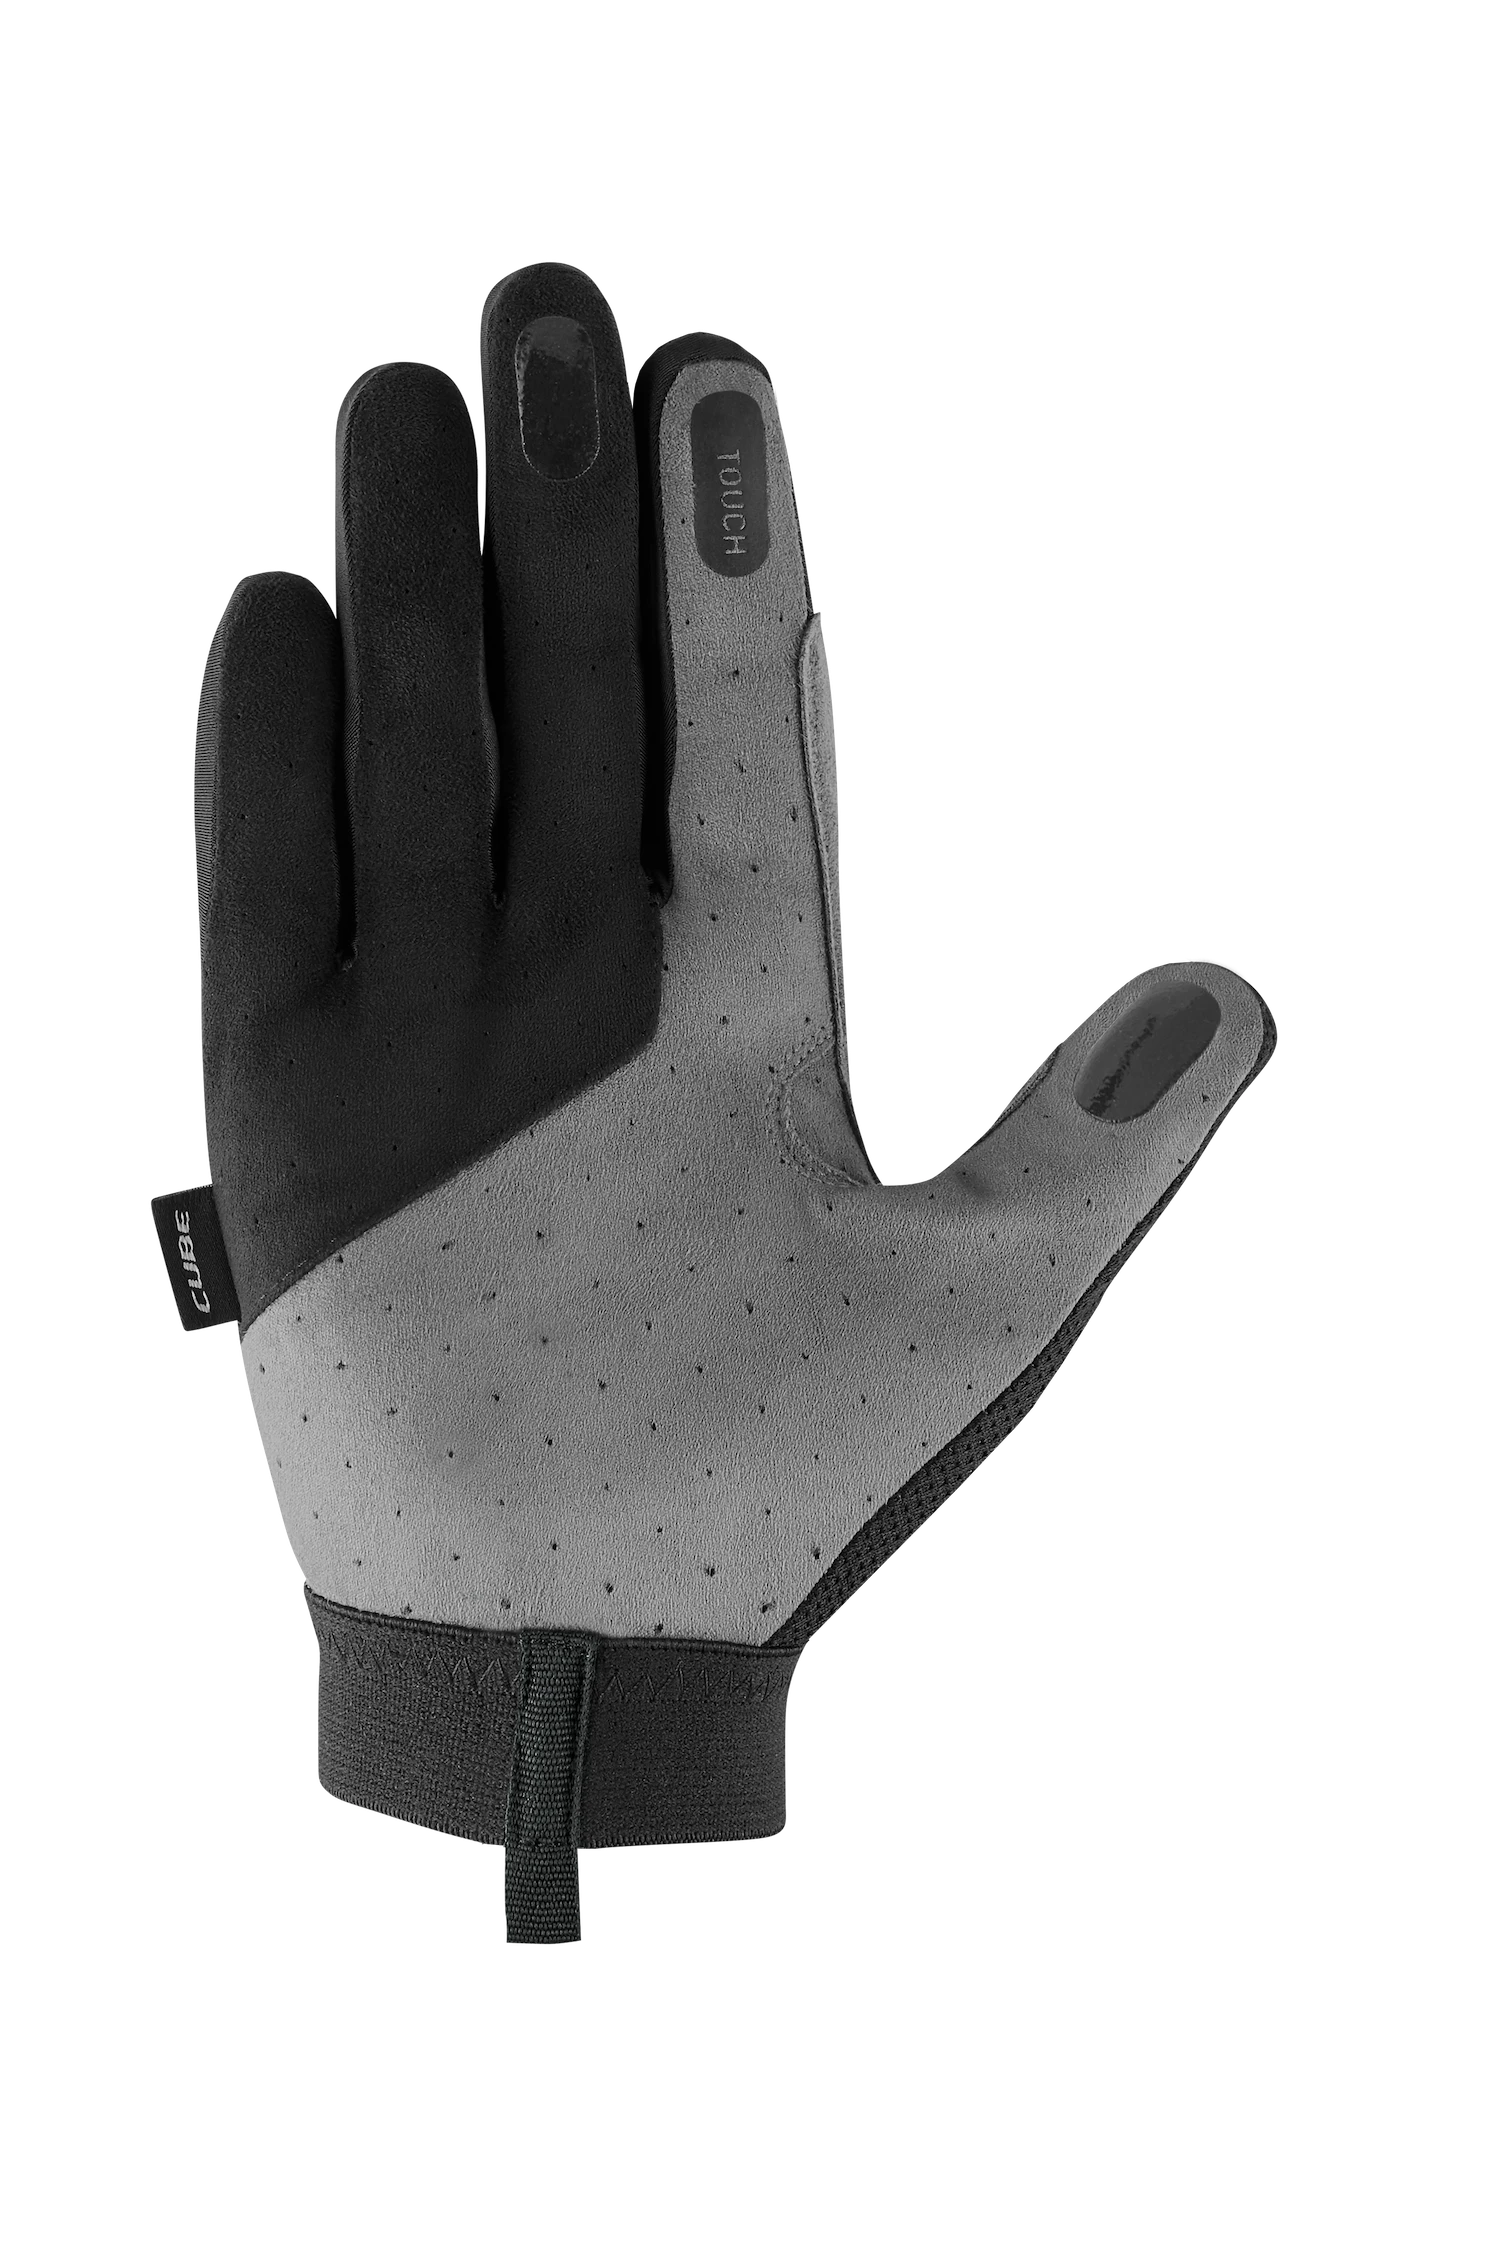 CUBE Handschuhe CMPT PRO black´n grey langfinger